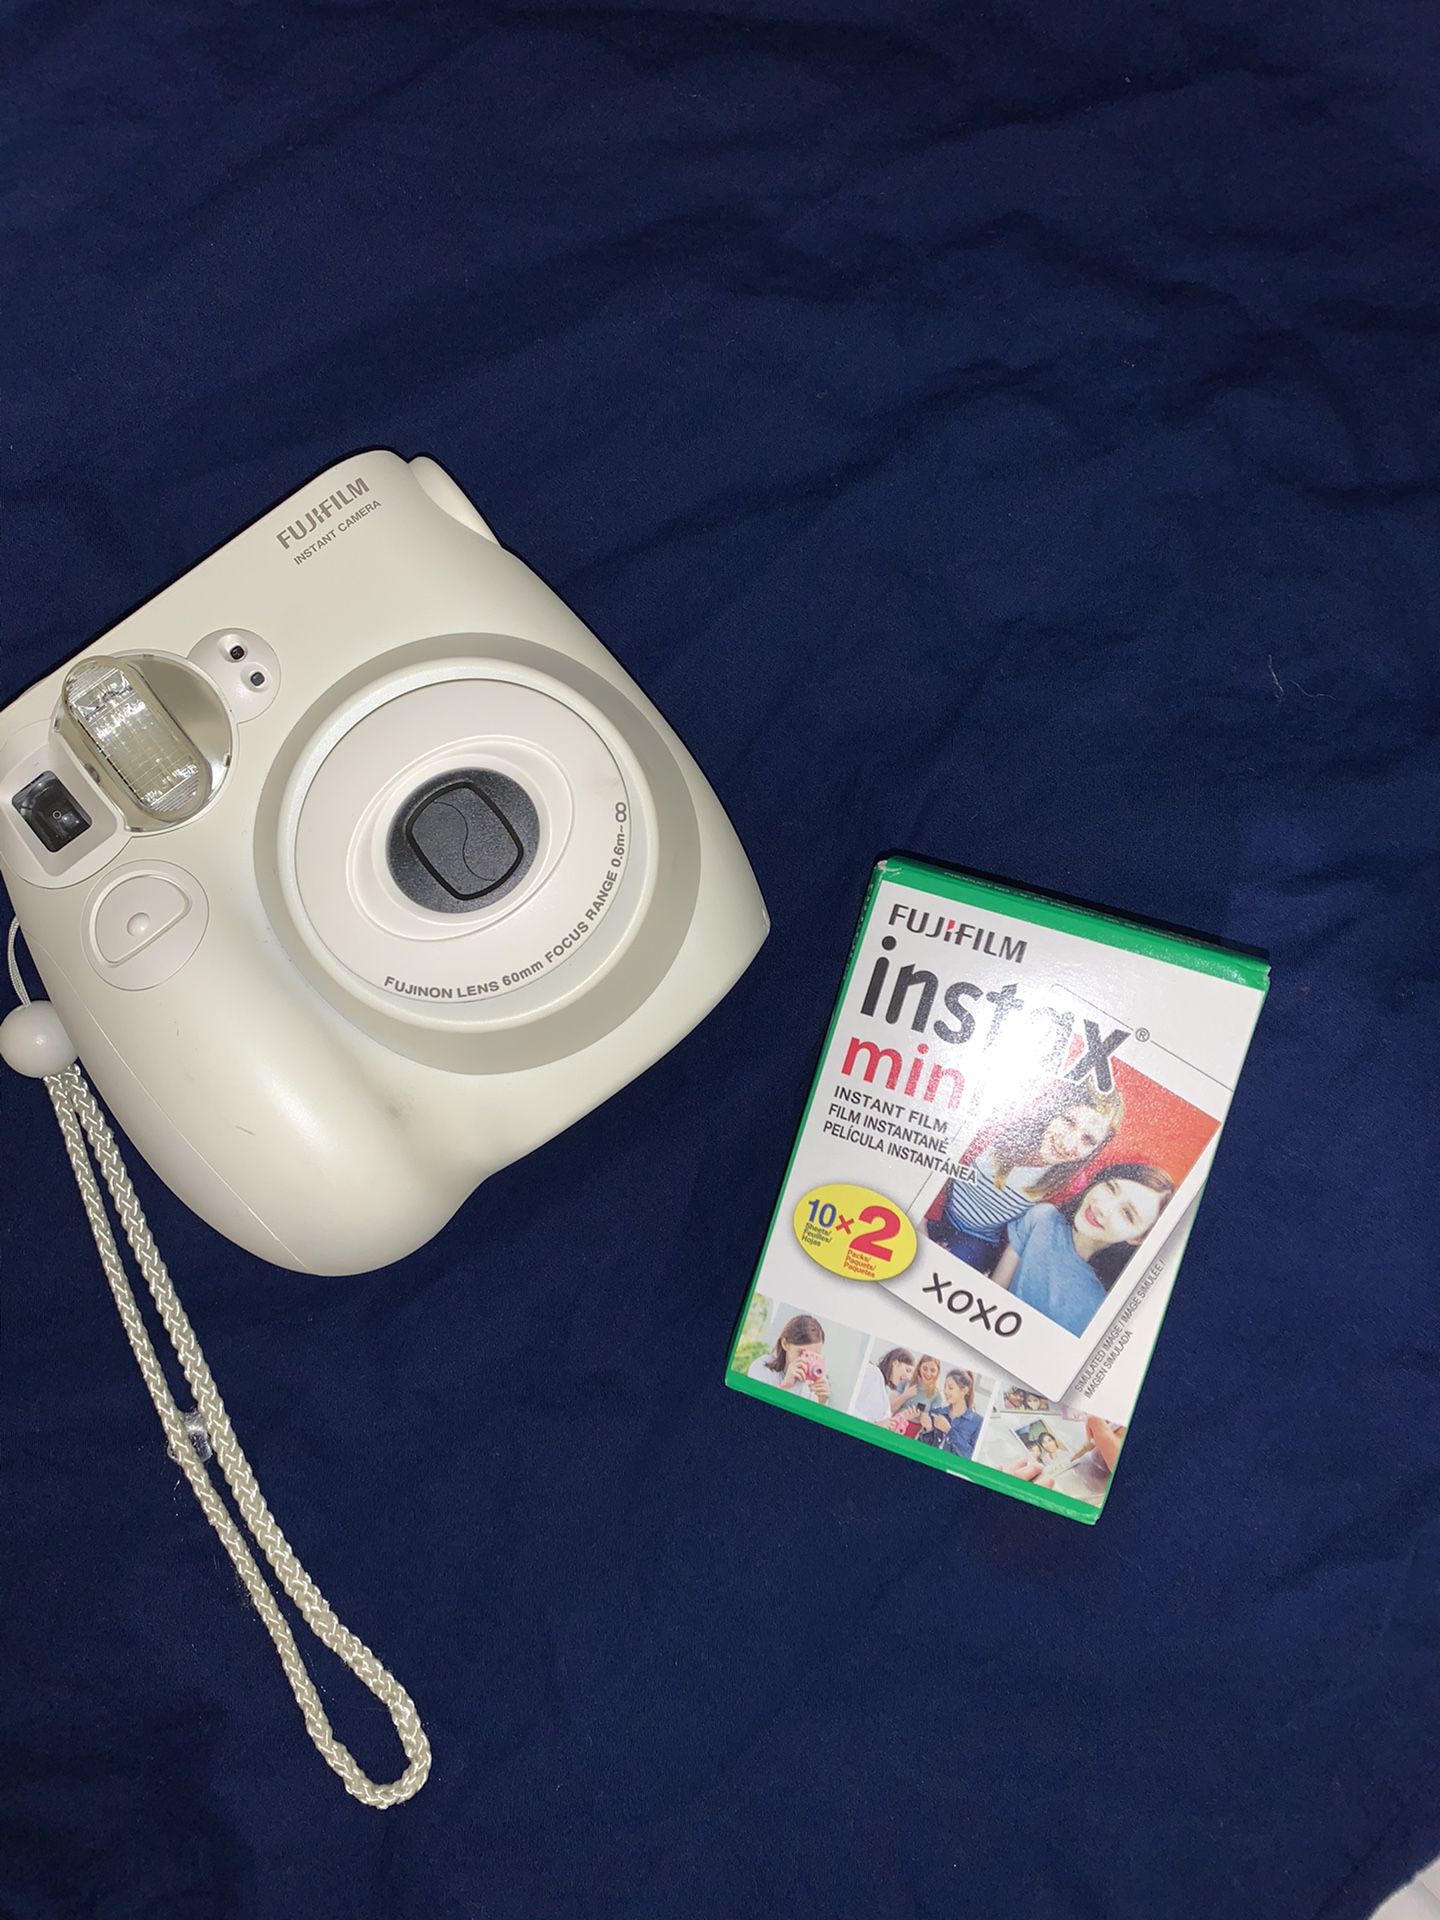 Fujifilm instax mini 7s instant camera / Polaroid camera